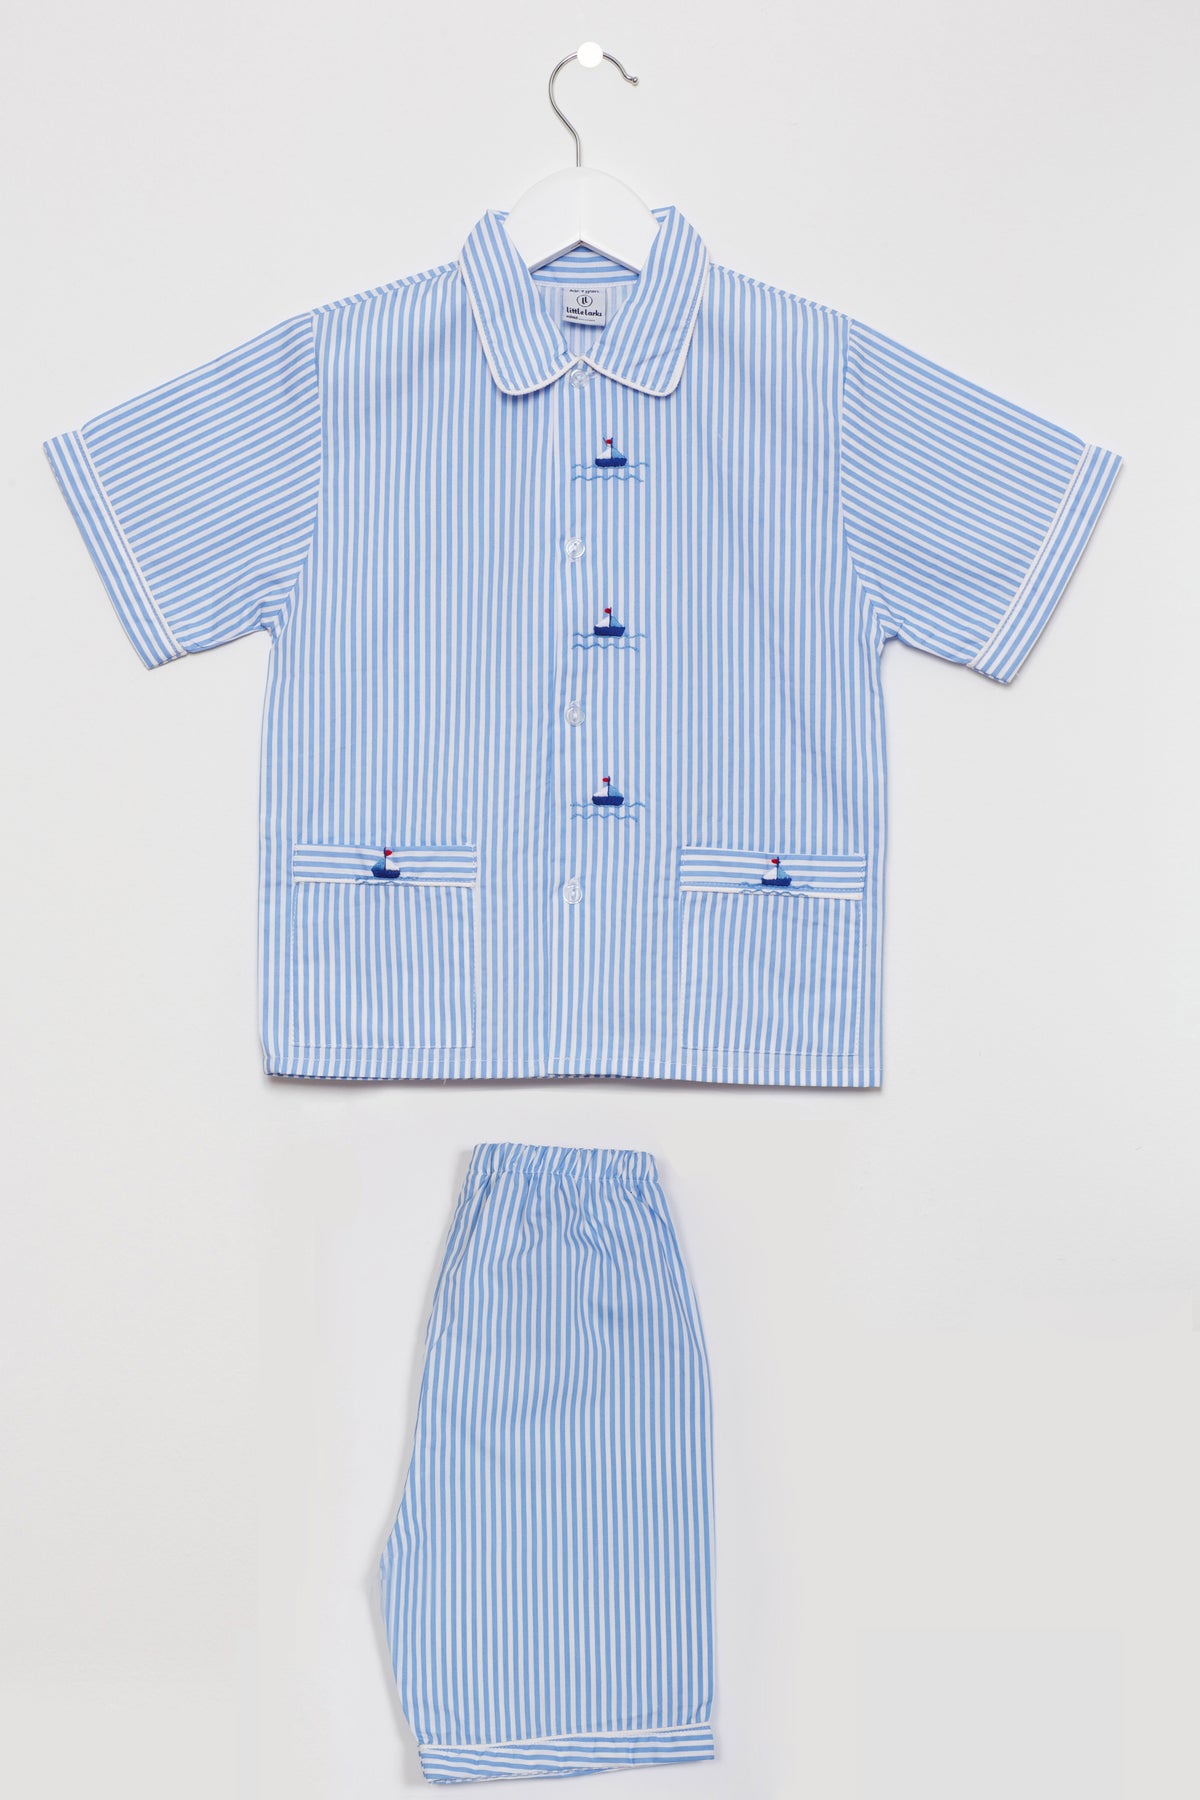 Boys Blue & White striped Pyjamas (4yrs)